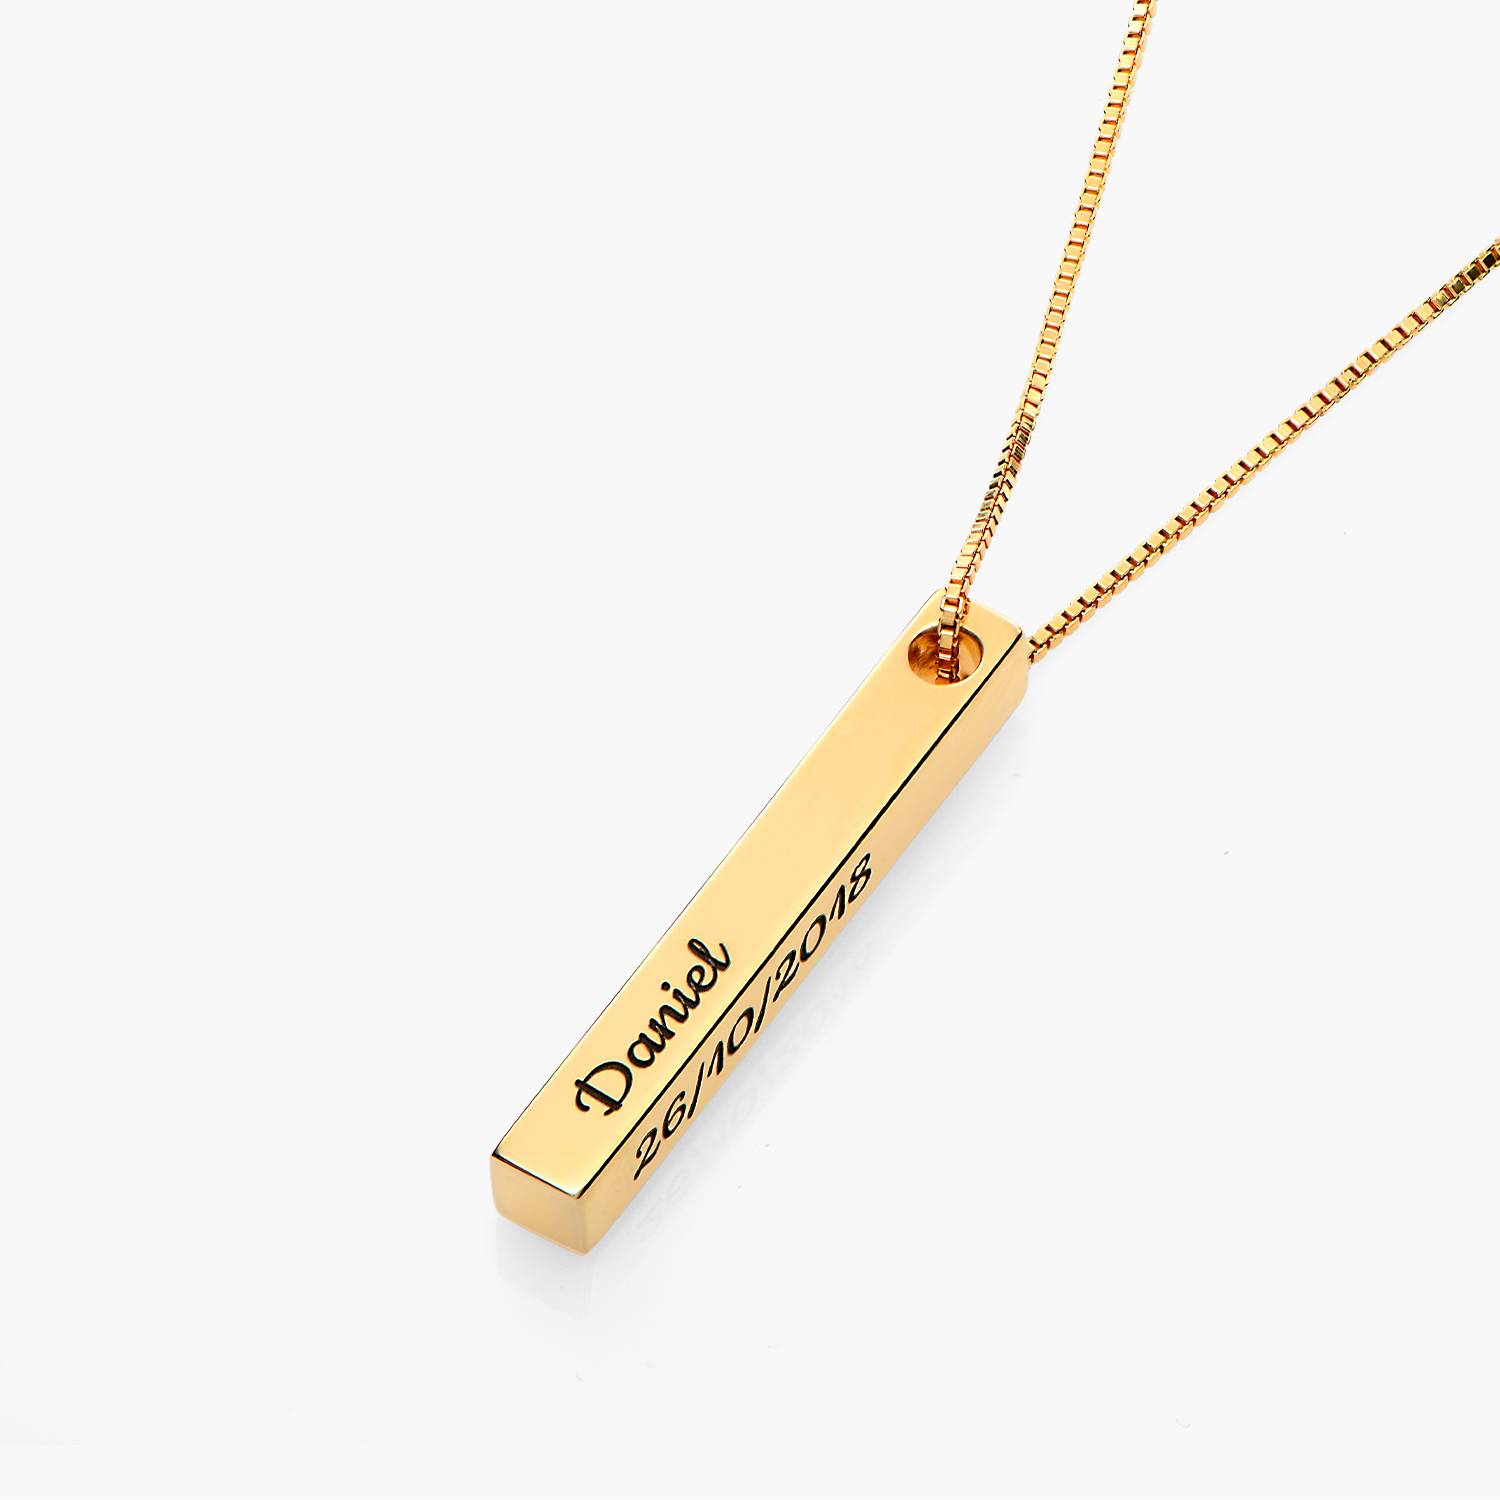 Pillar Bar Necklace - 18k Gold Vermeil-1 product photo